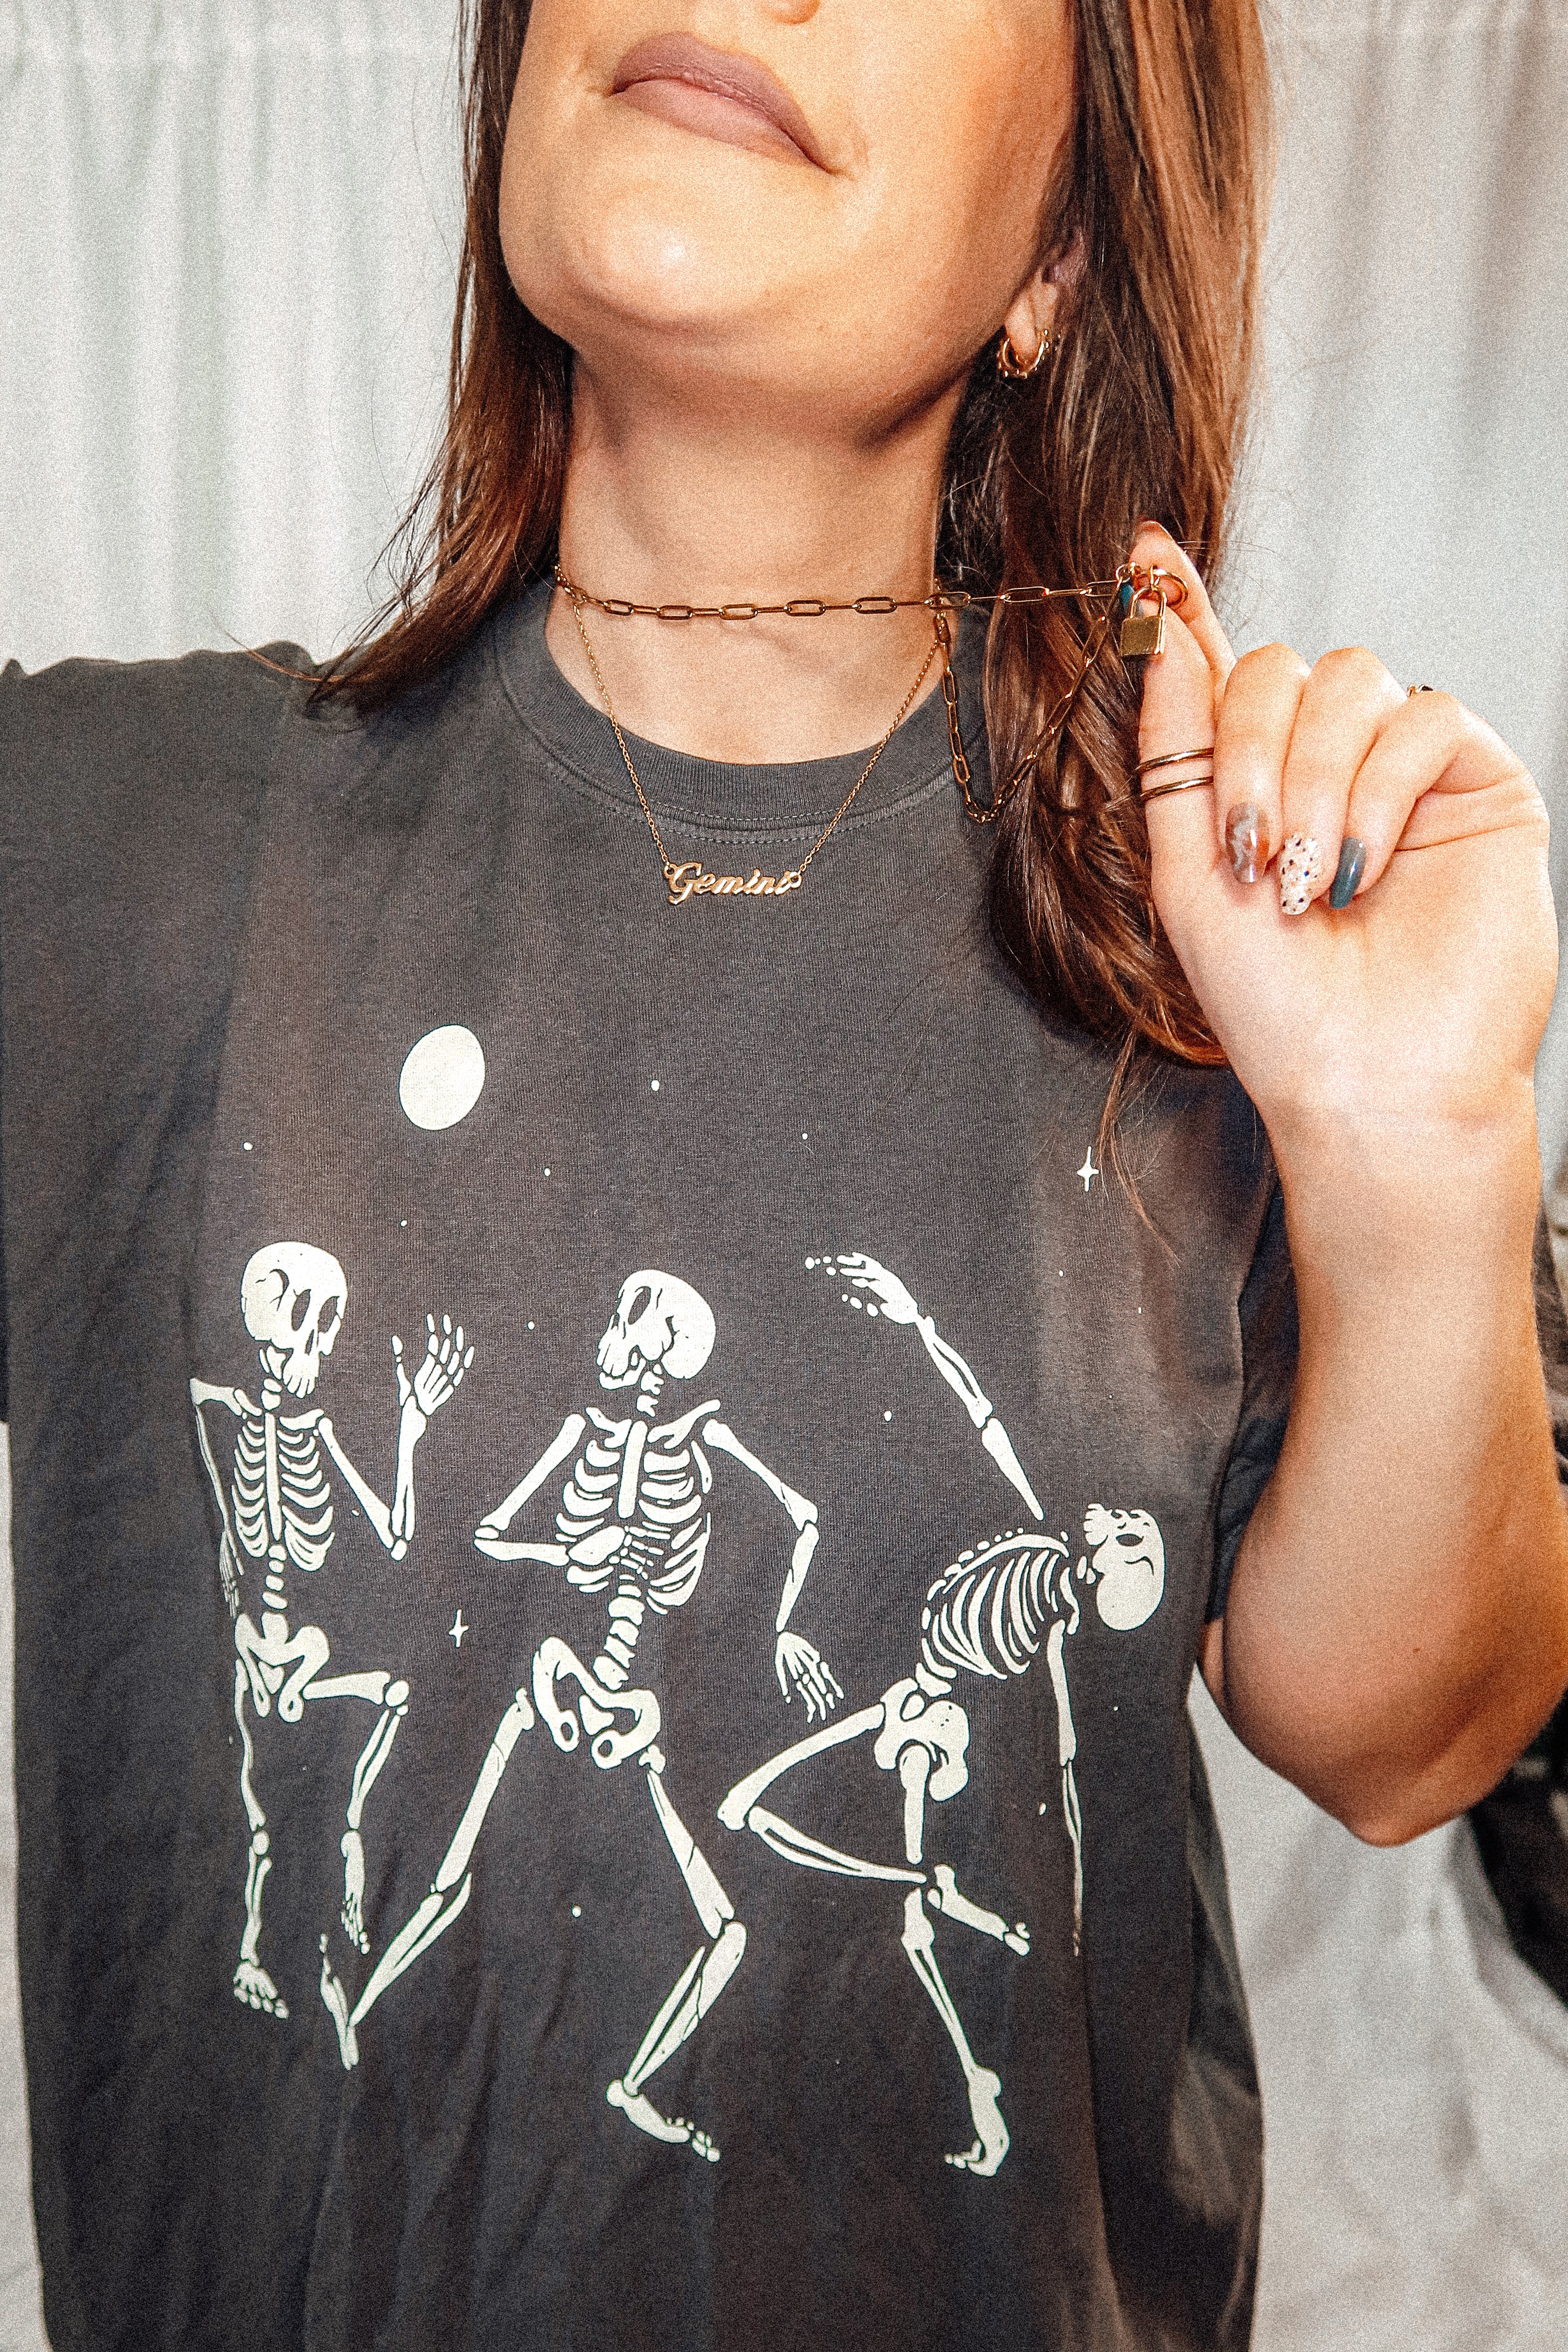 Underground Original Design: Dancing Skeletons Under a Moon Oversized TShirt